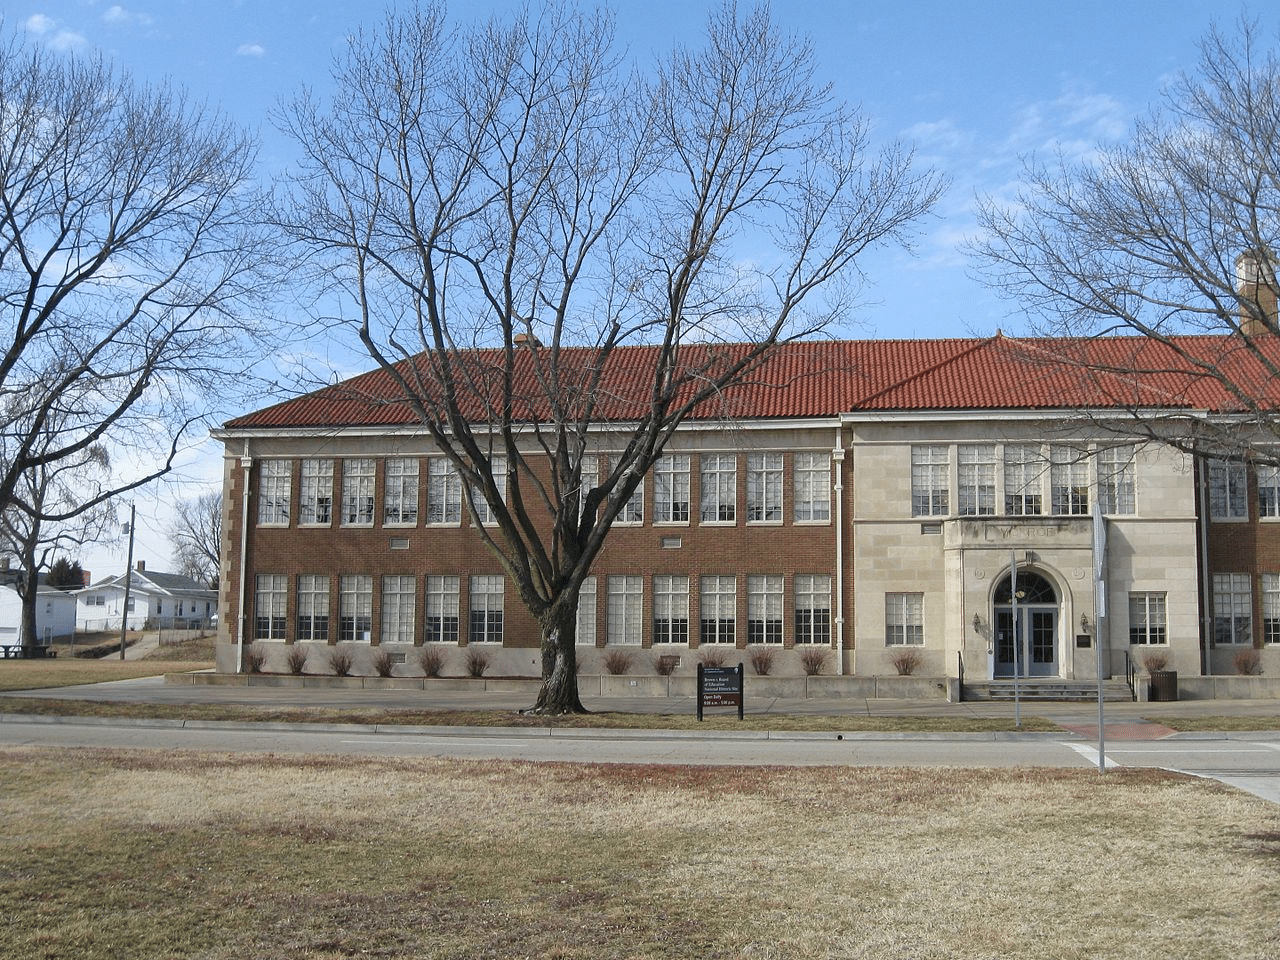 Monroe School in Brown v. Board of Education National Historic Park